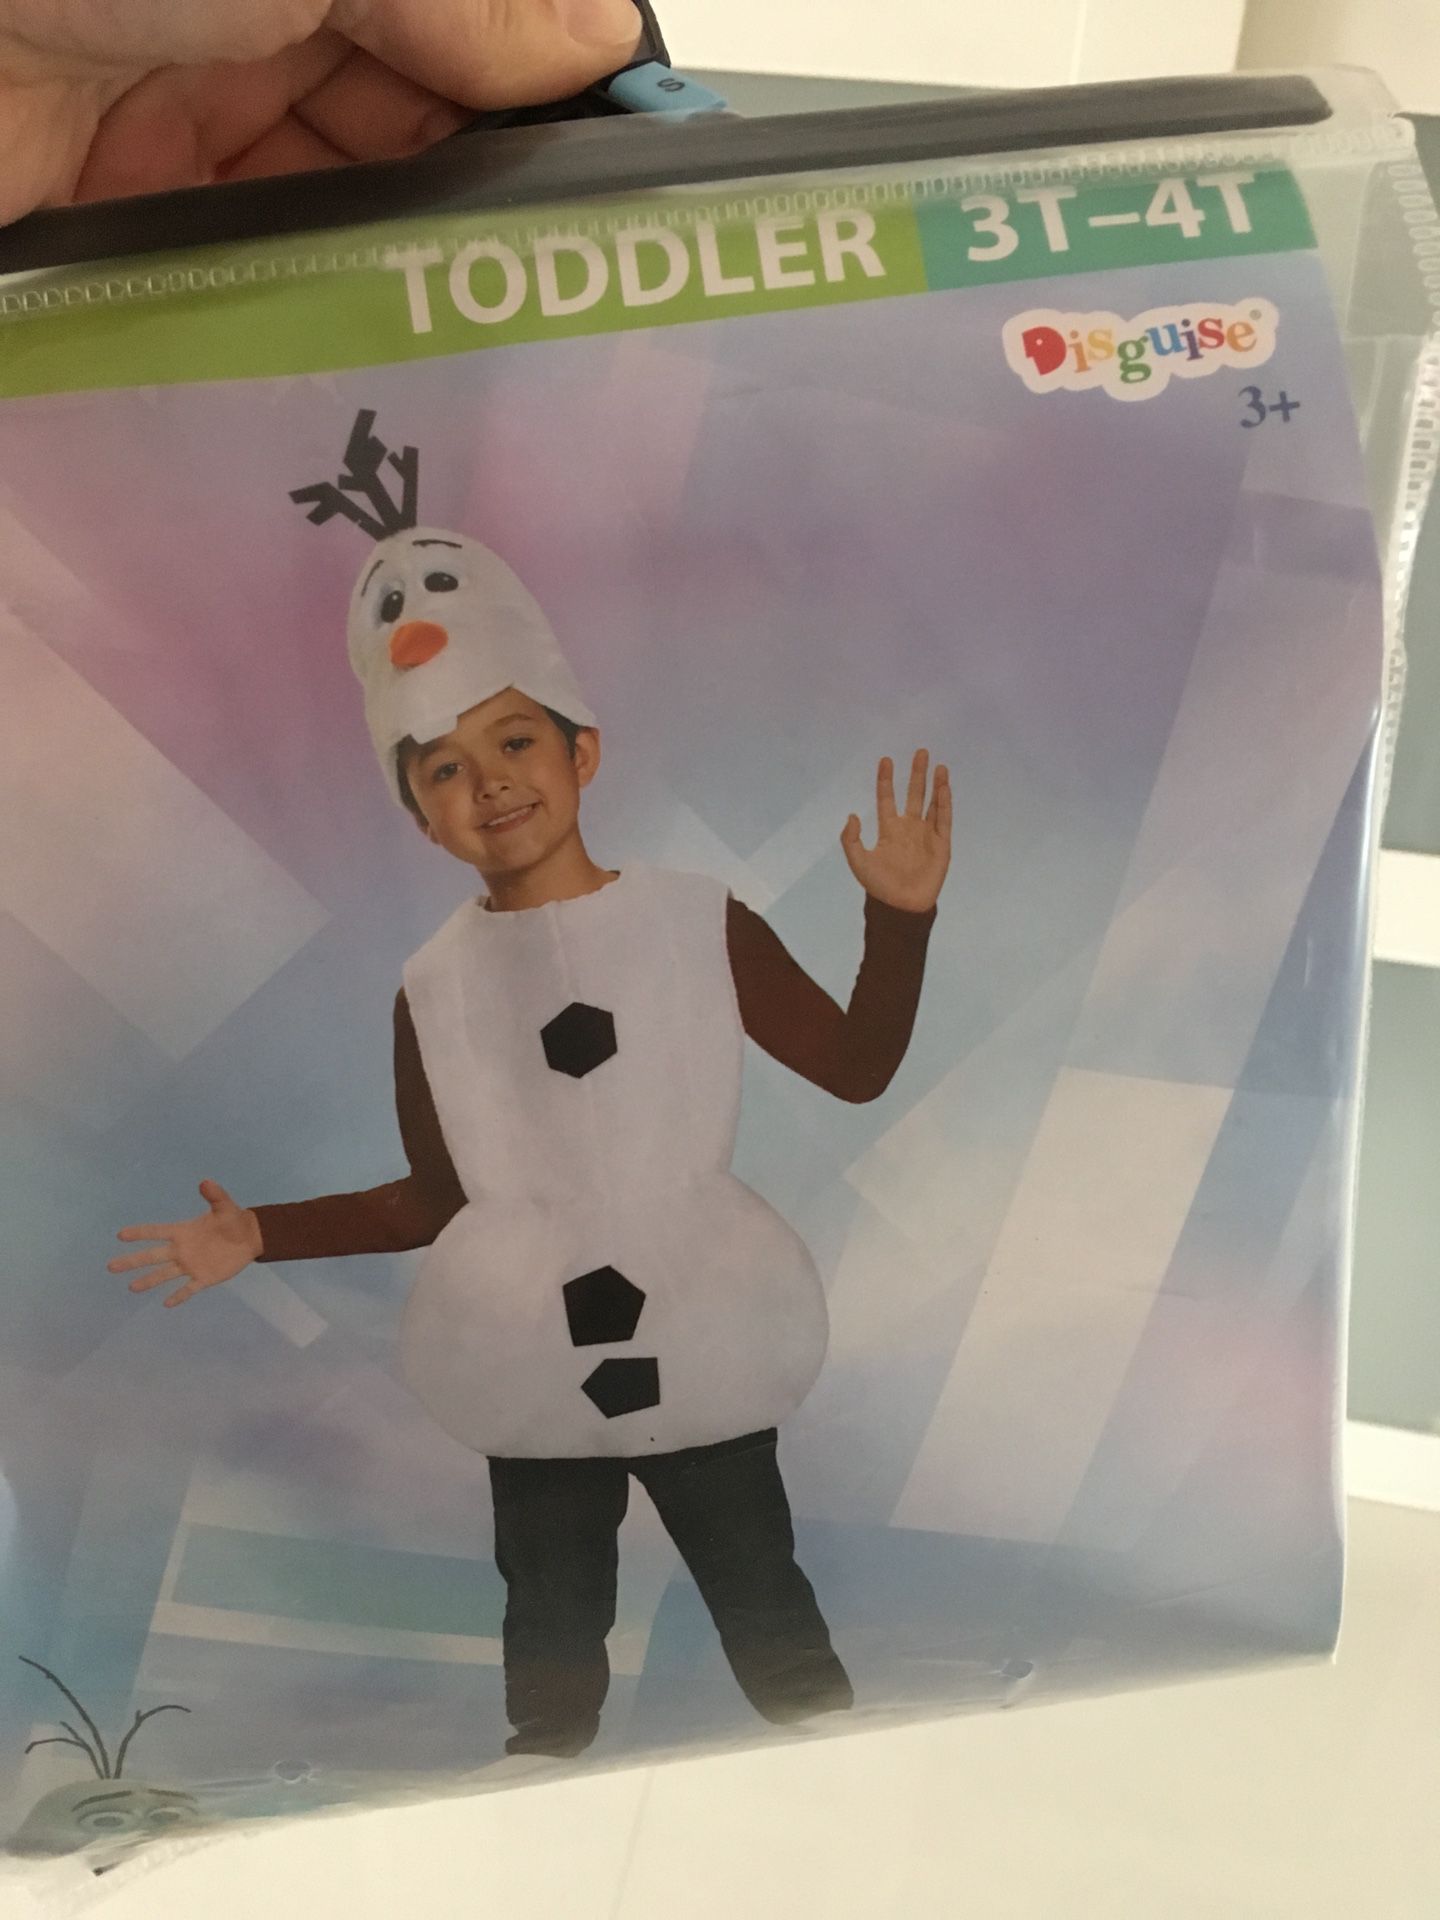 Olaf toddler costume